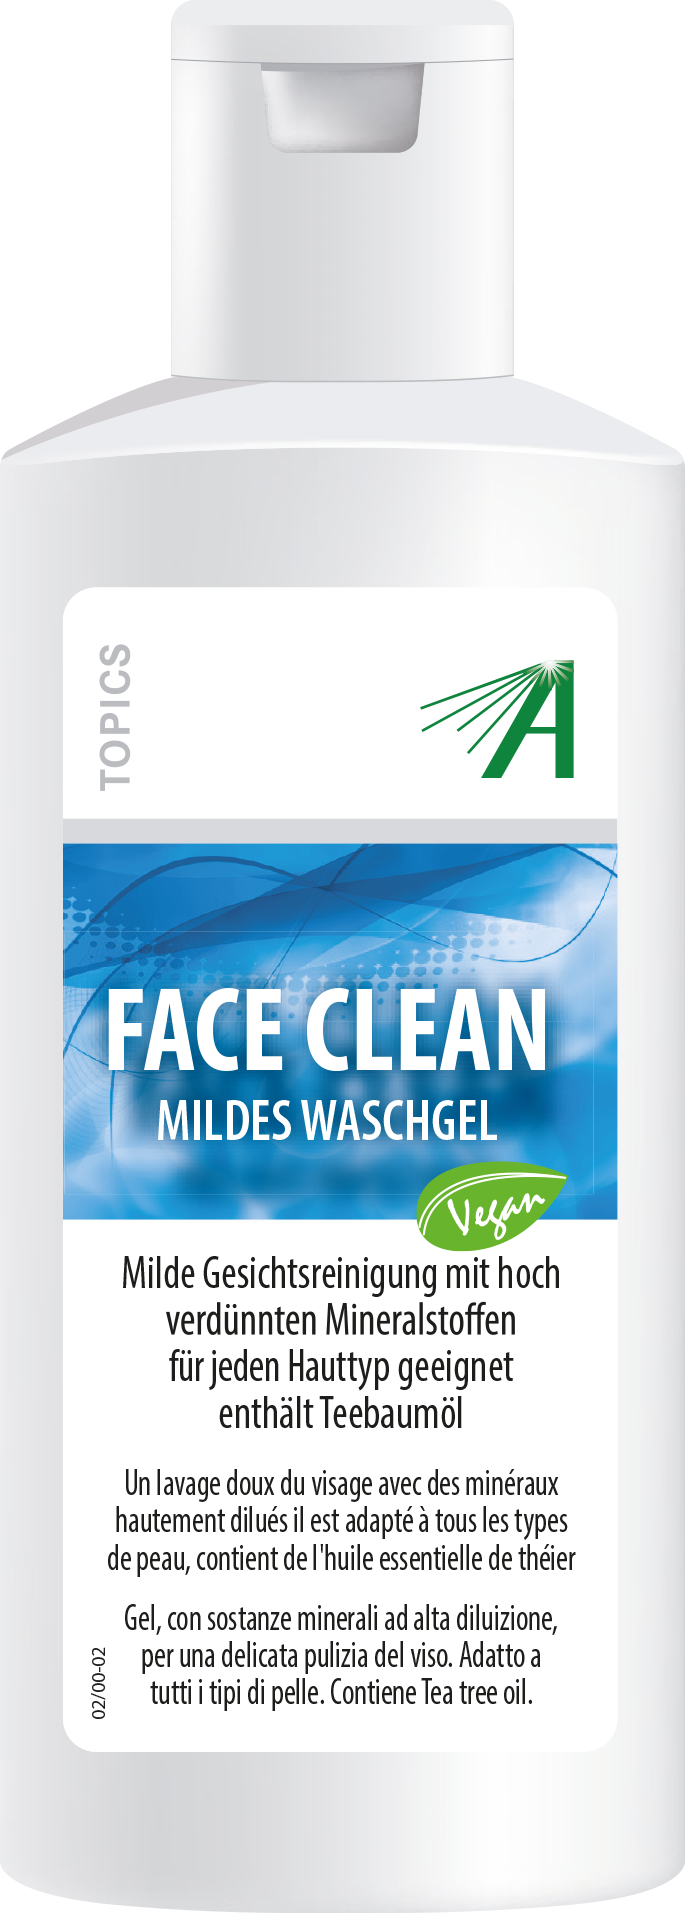 Adler Face Clean